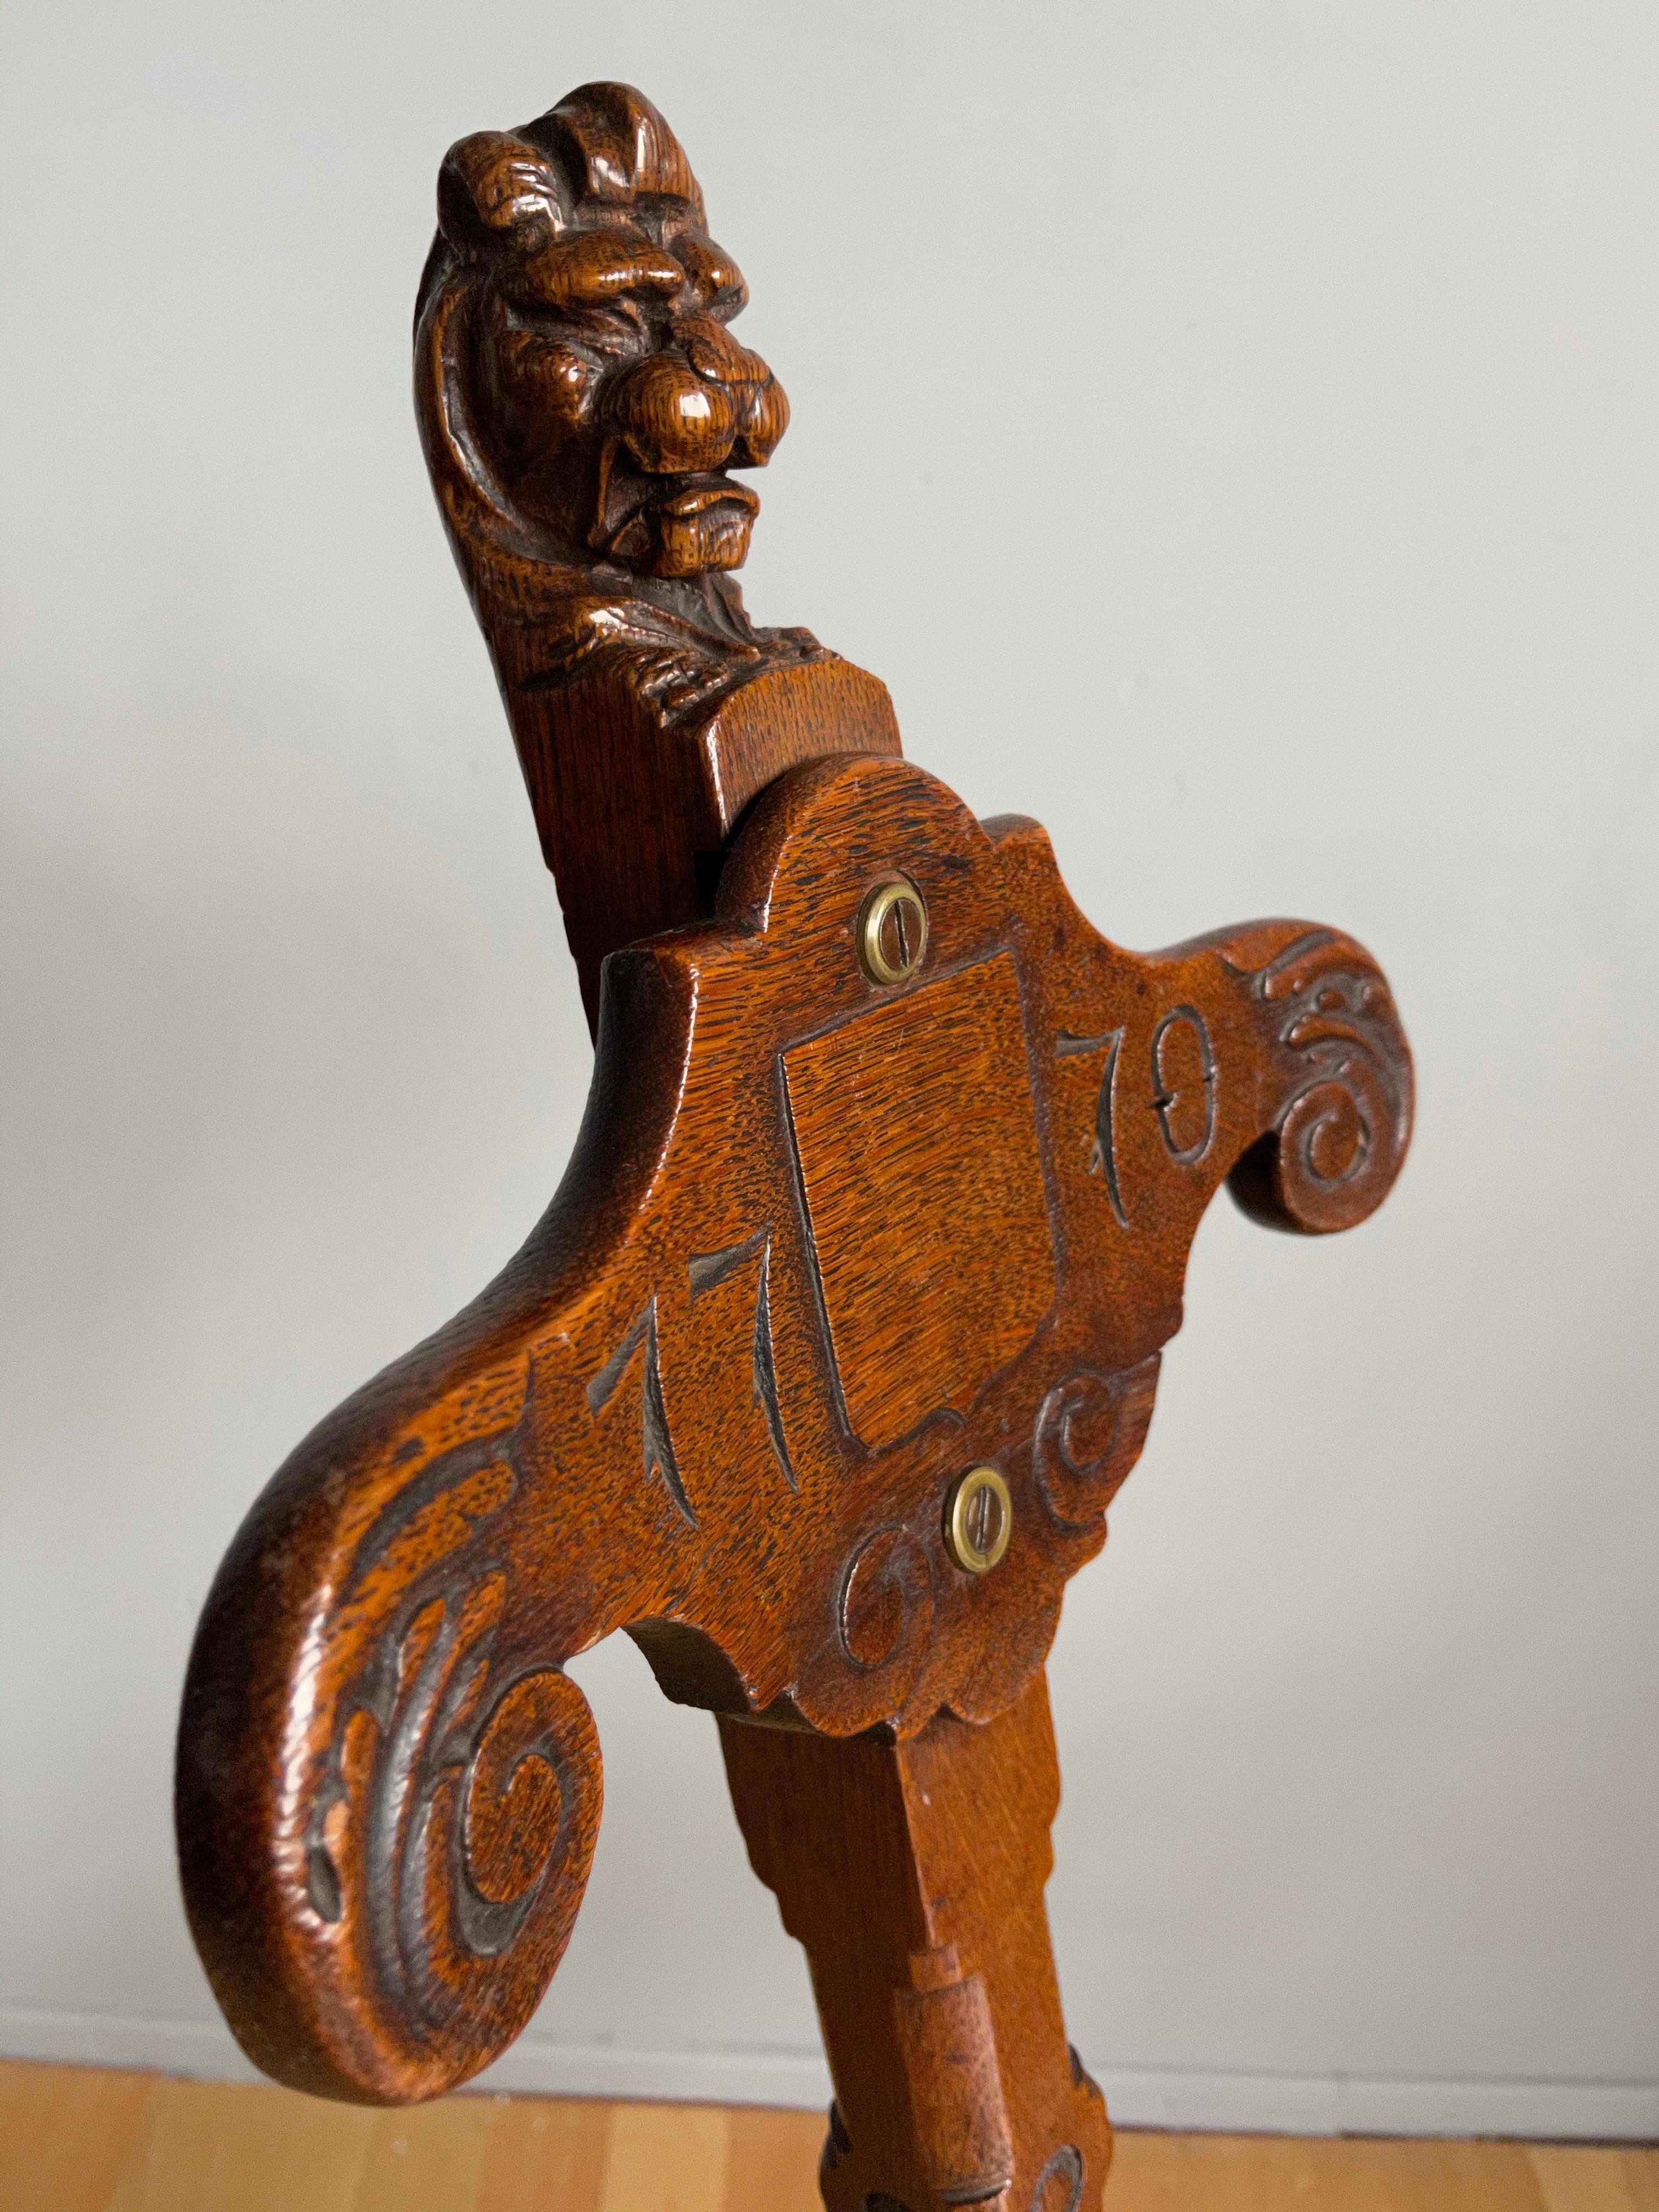 Unique 18th Century Renaissance Revival Carved Oak Three-Legged Chair with Lion For Sale 6